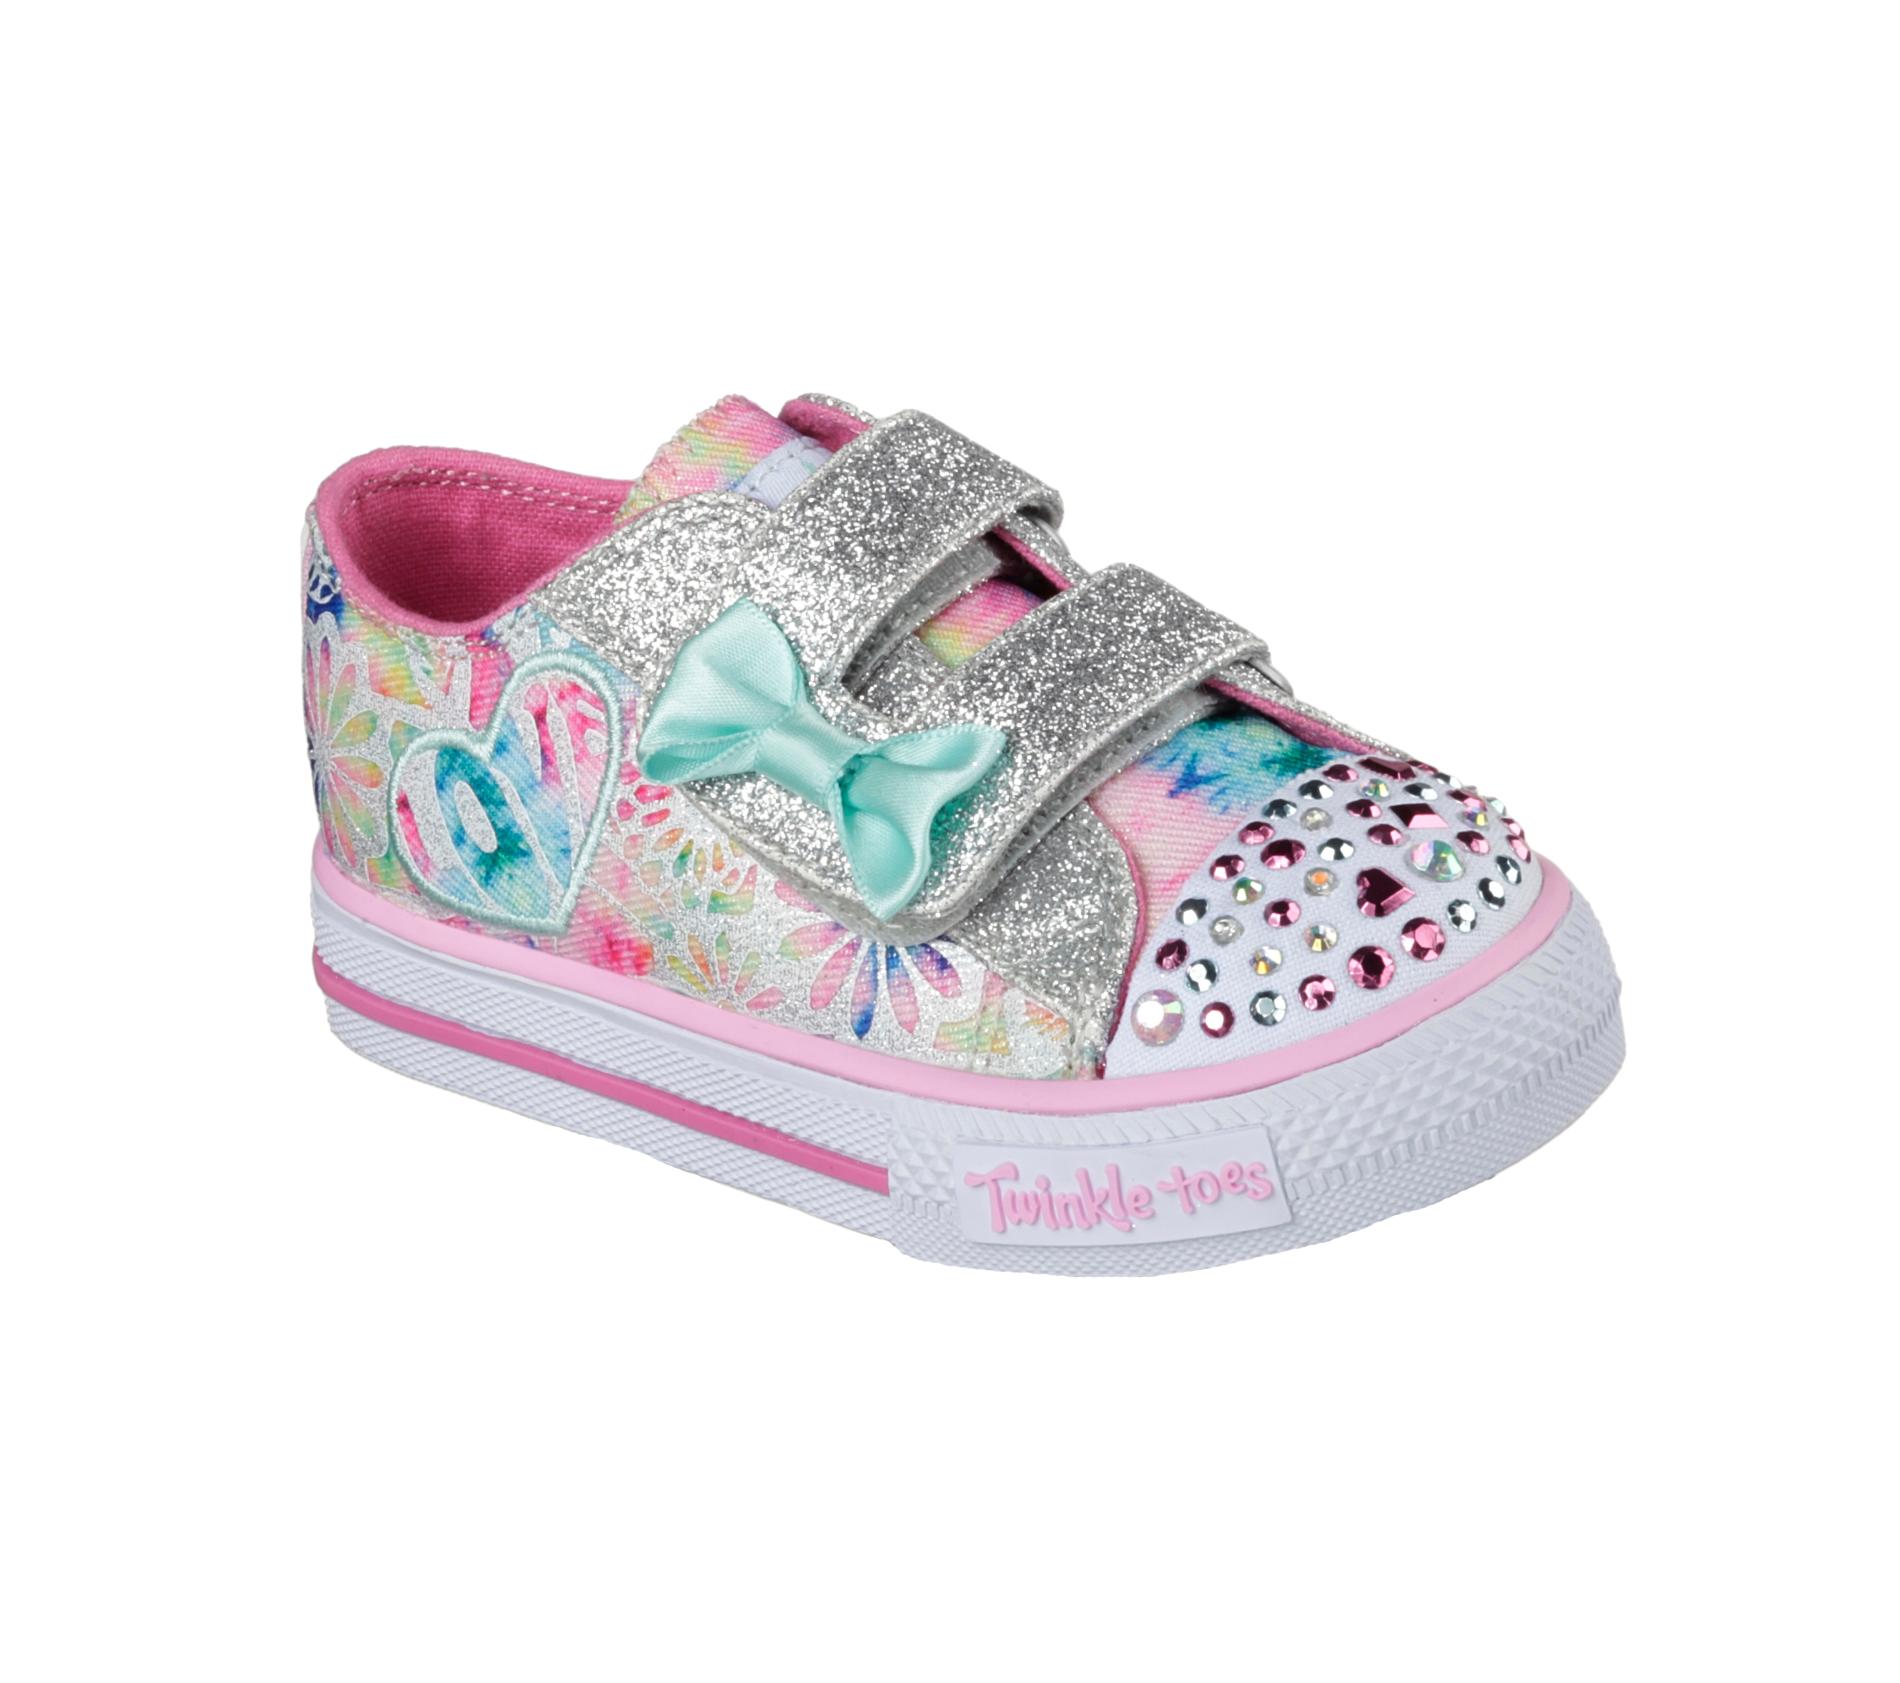 Skechers Toddler Girl's Twinkle Toes: Shuffles - Glitter Pop Pink Light-Up Sneaker